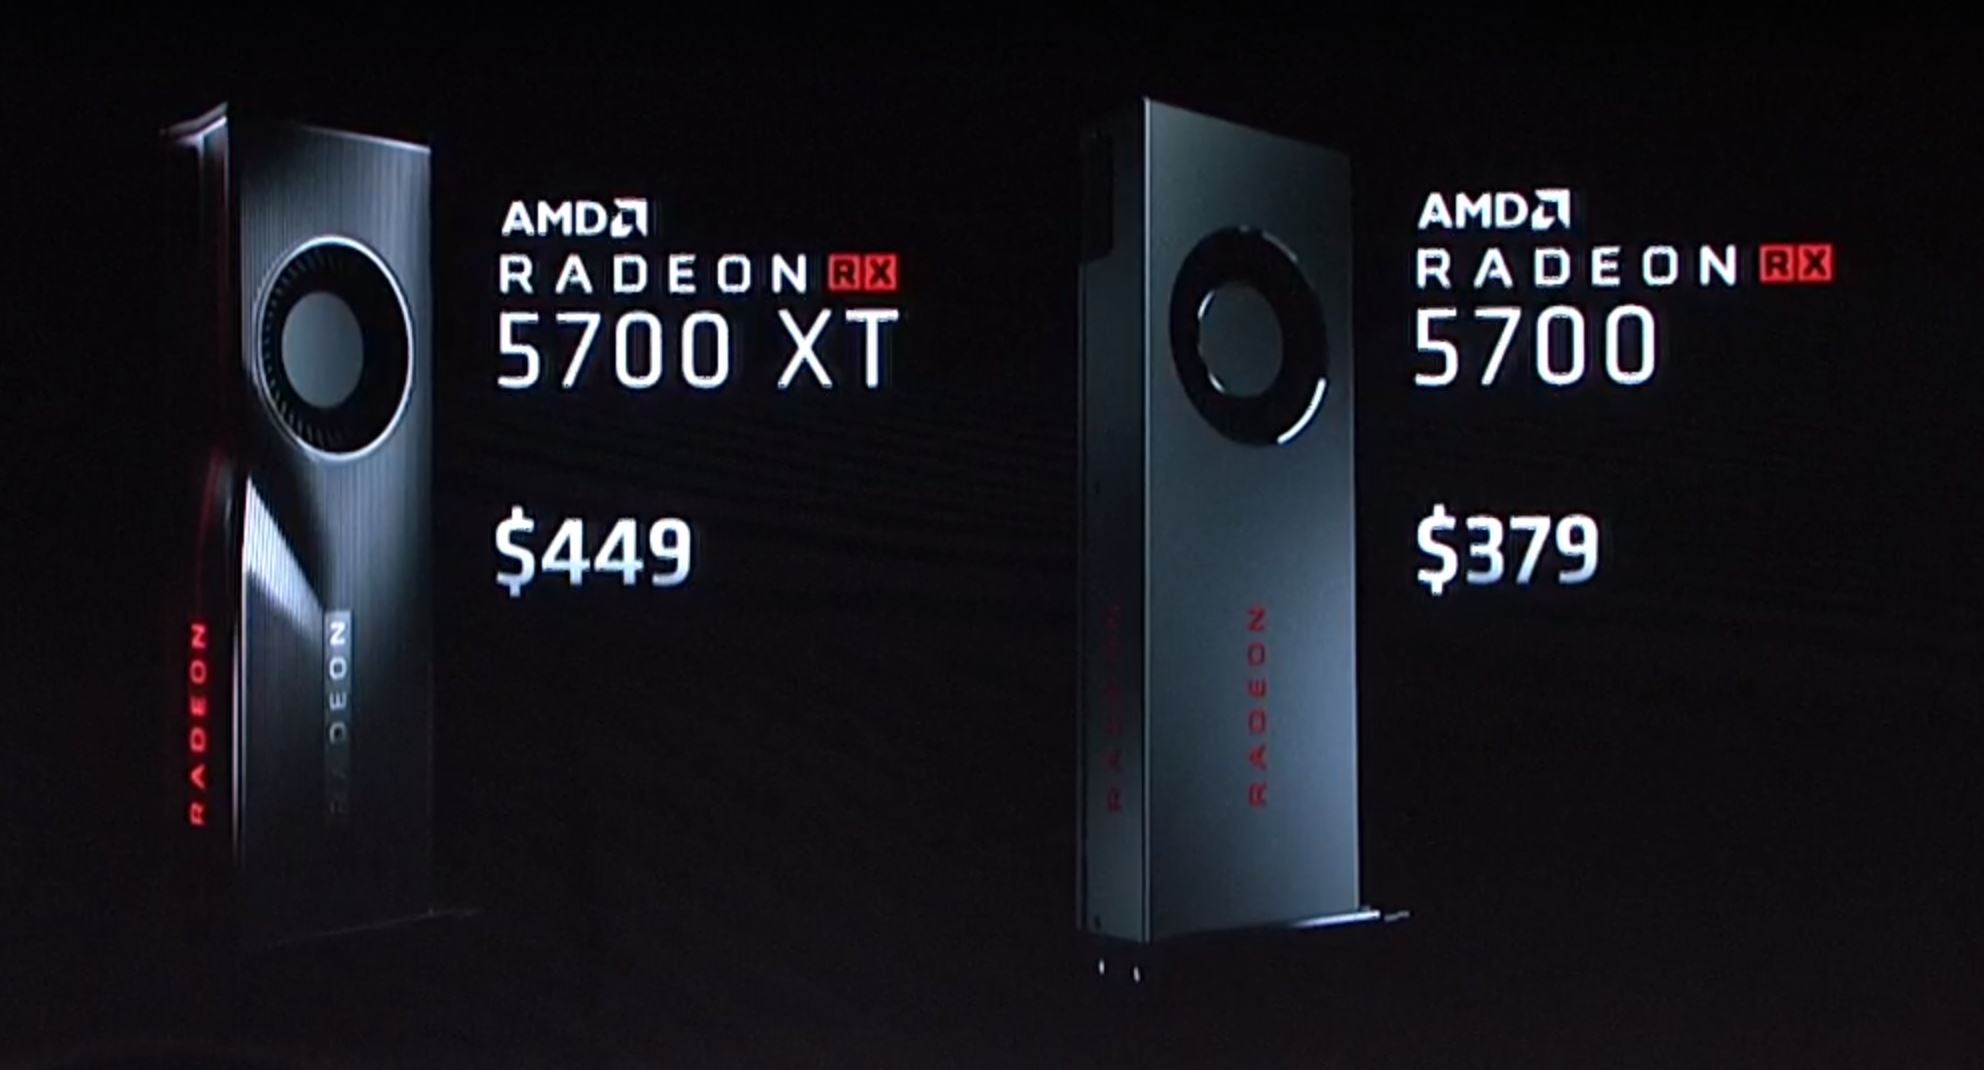 AMD Radeon RX 5700 XT and Radeon RX 